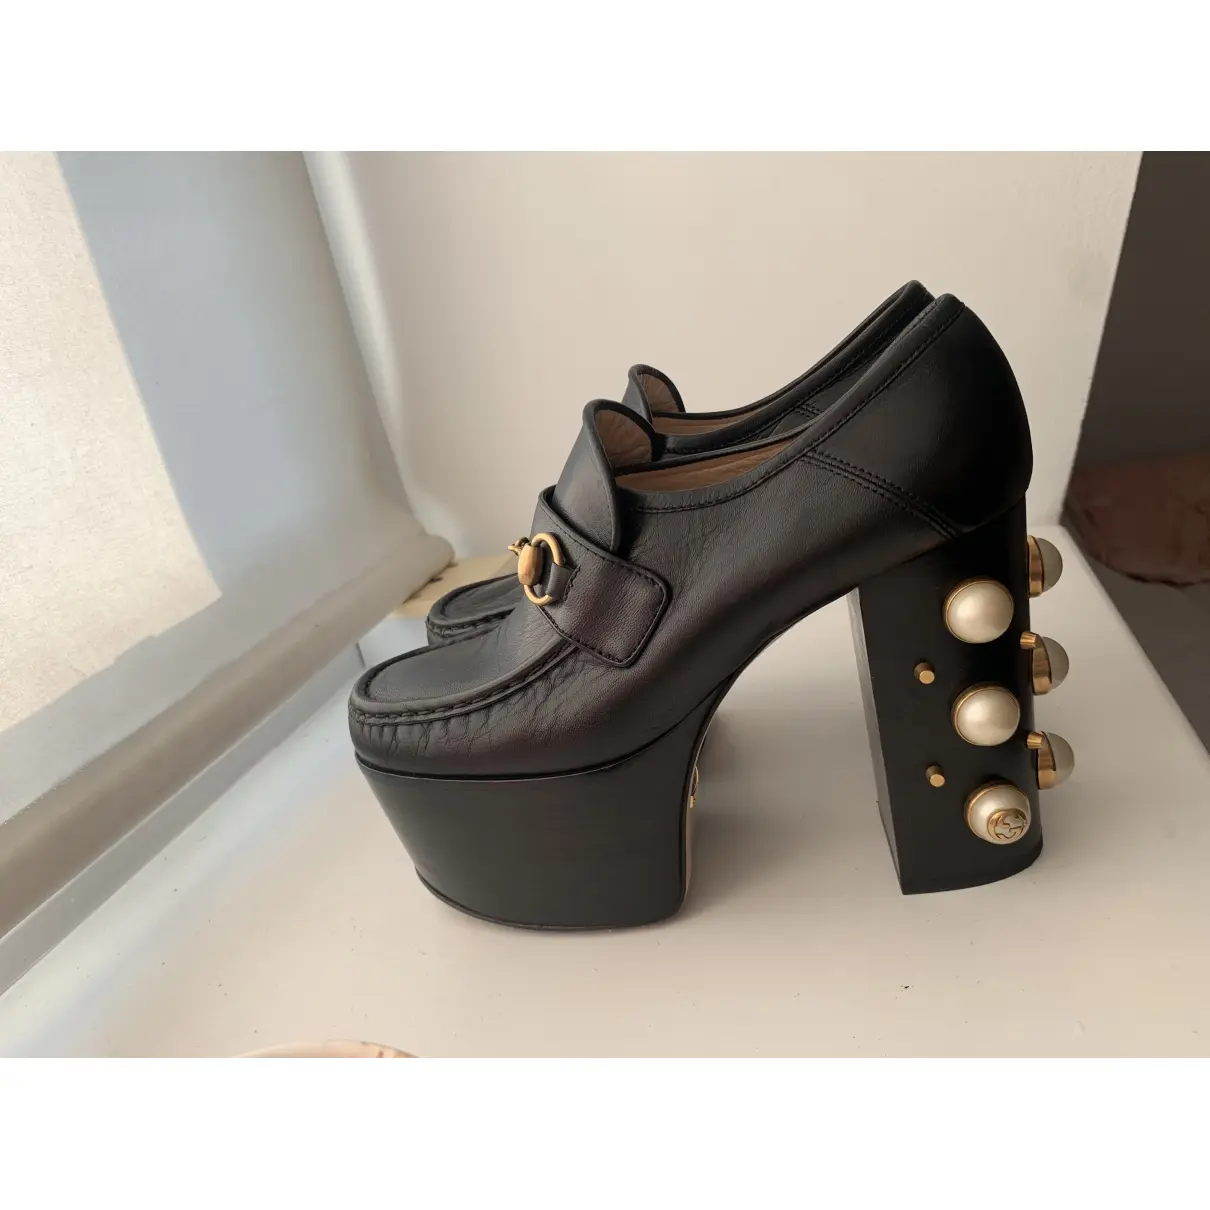 Buy Gucci Vegas leather heels online